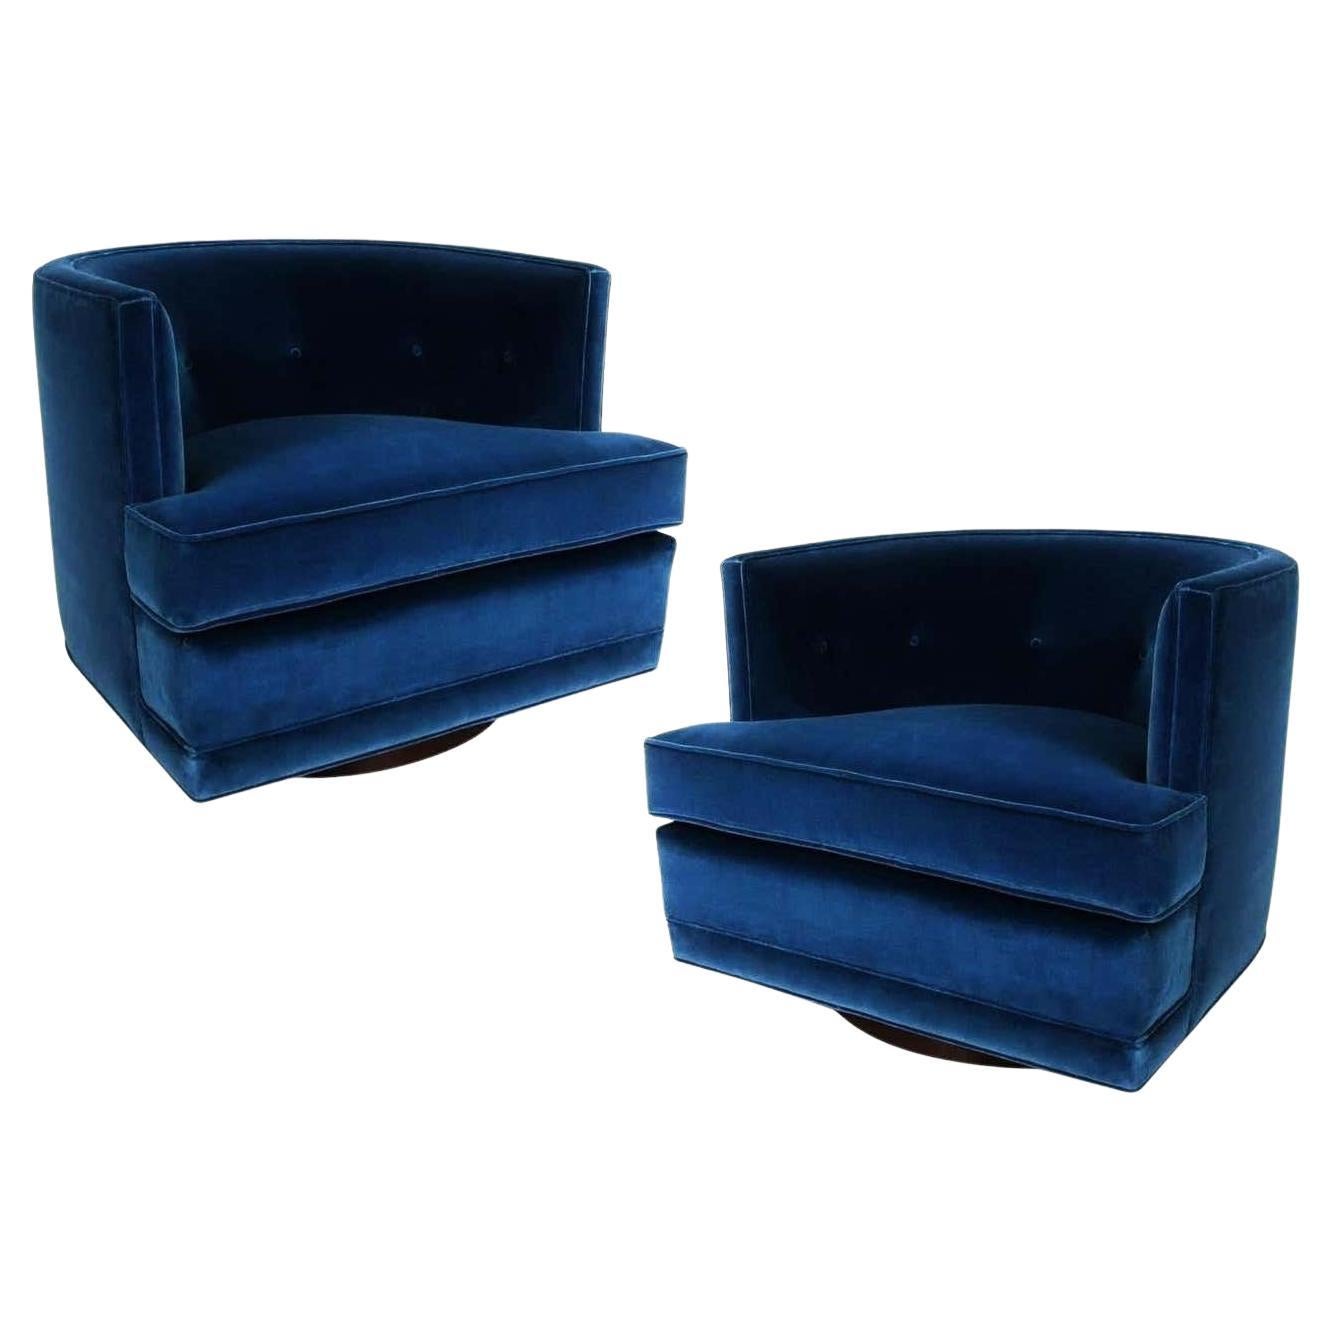 Mid-Century Modern Pair of Luxurious Blue Velvet Swivel Lounge Chairs